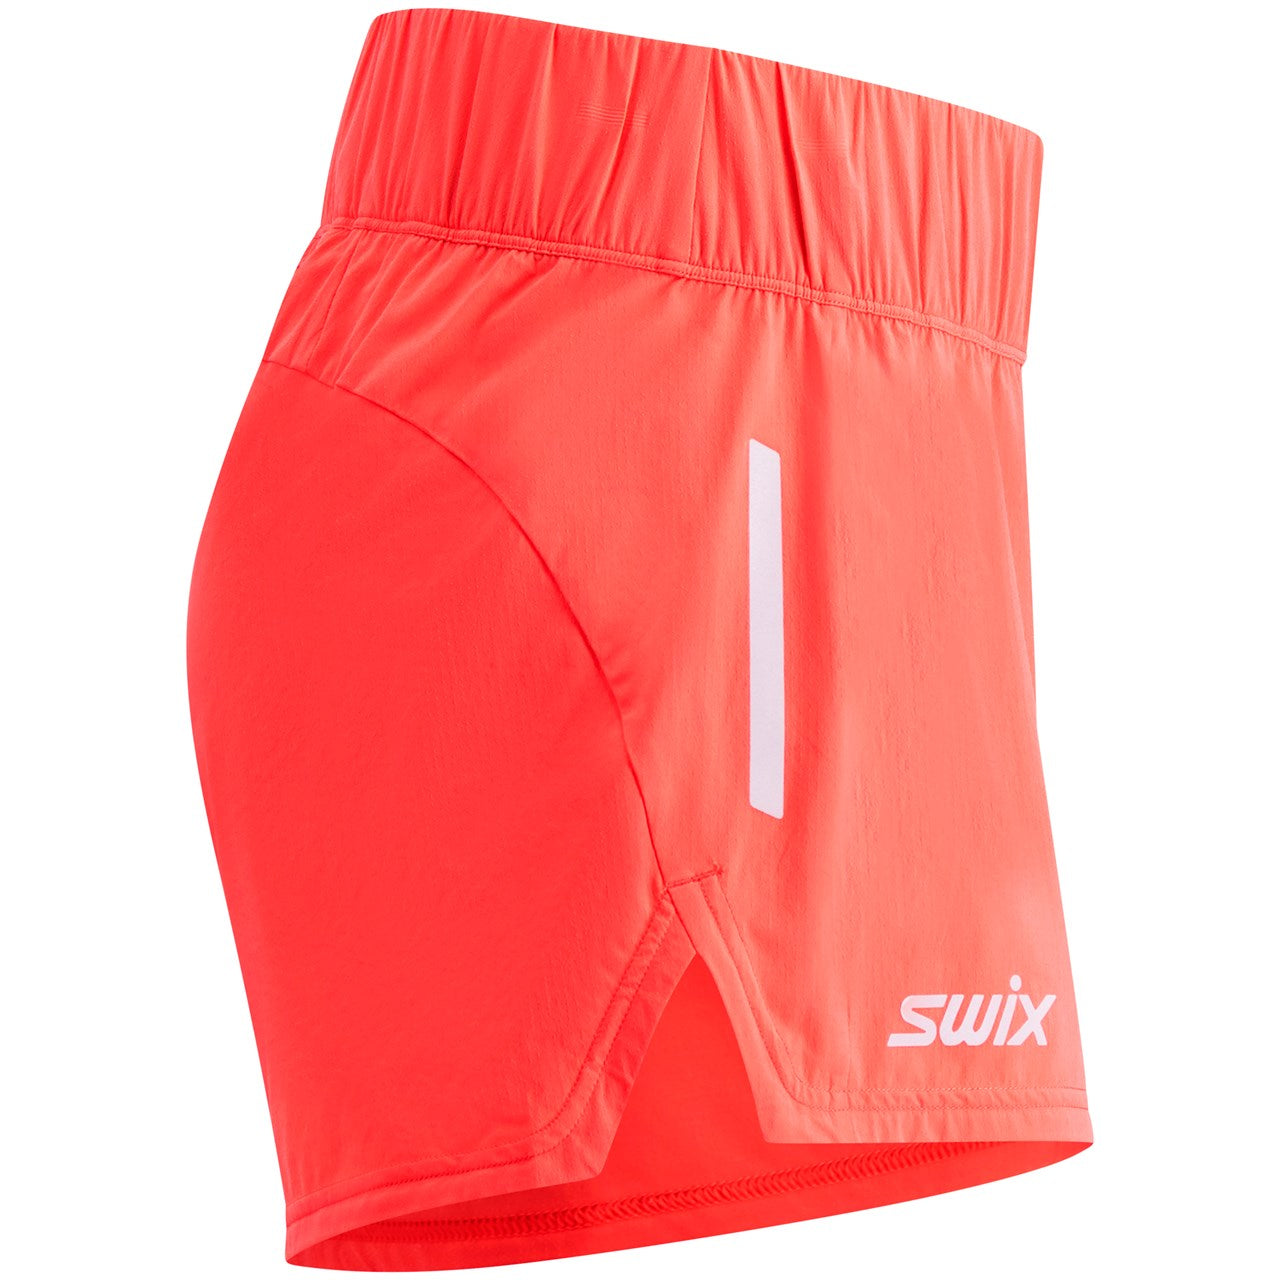 Bodychum Flowy Sports Shorts Light Breathable Soft Fabric 2 in 1